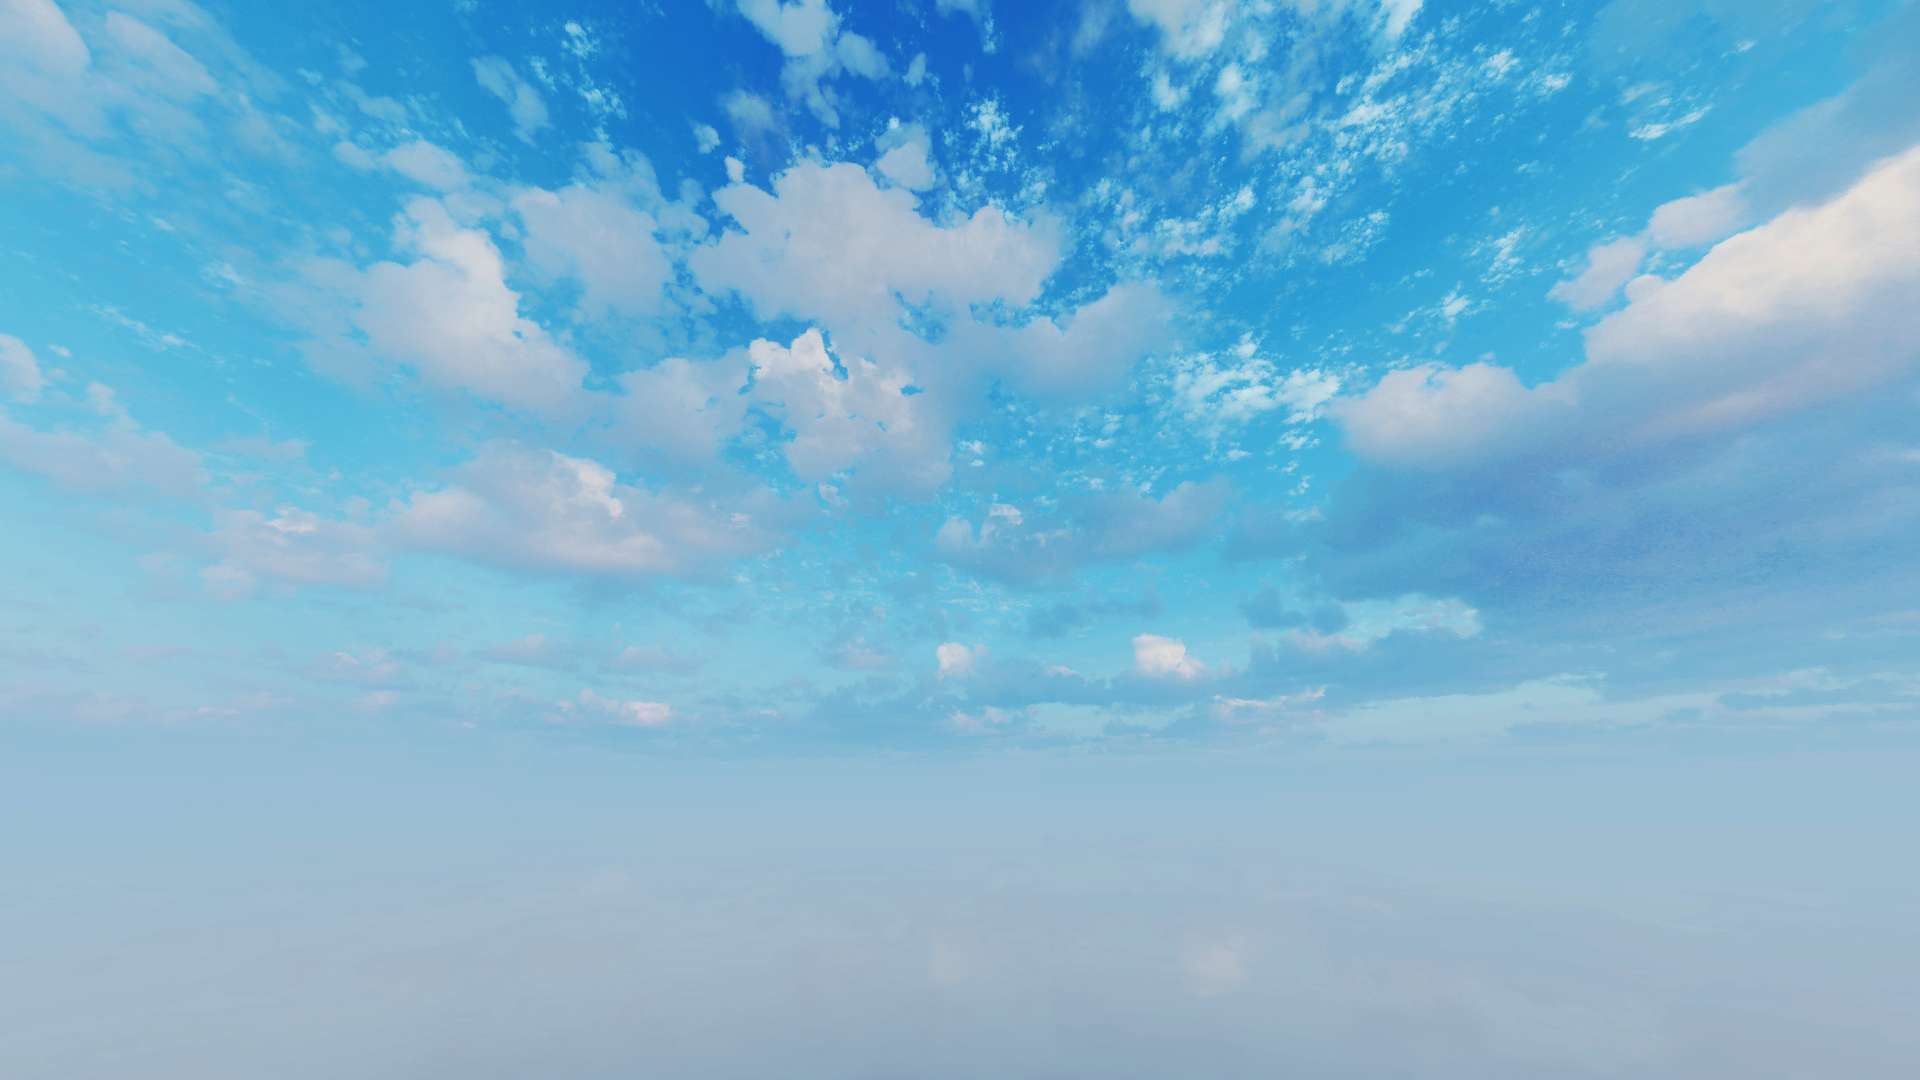 Aesthetic Blue Sky 16 by Yuruze on PvPRP